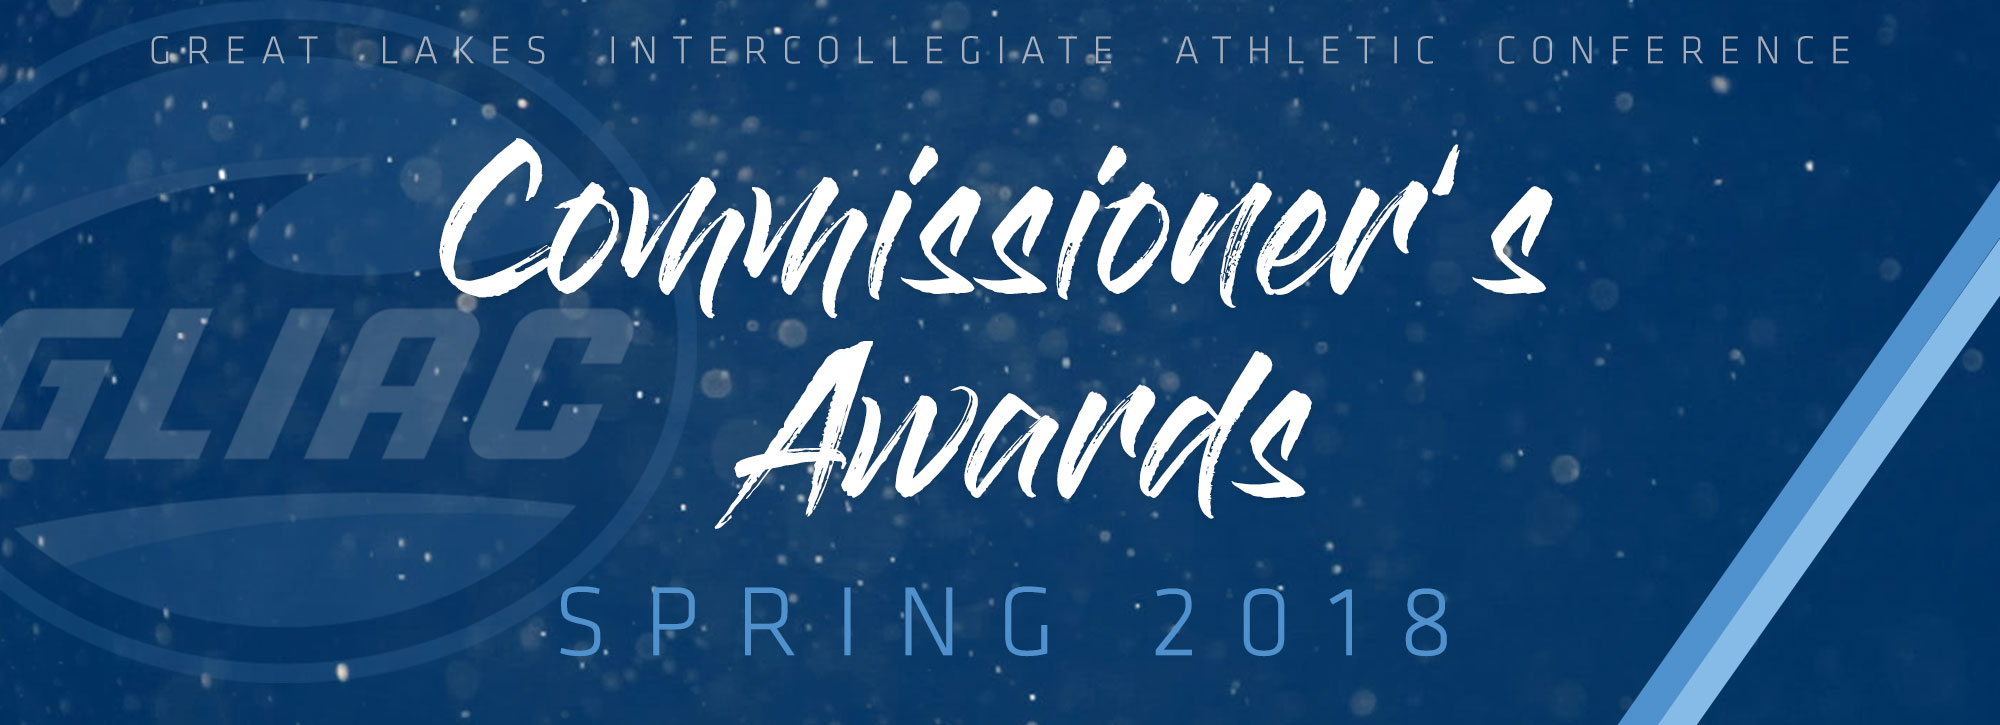 GLIAC Spring 2018 Commissioner's Award Recipients Announced